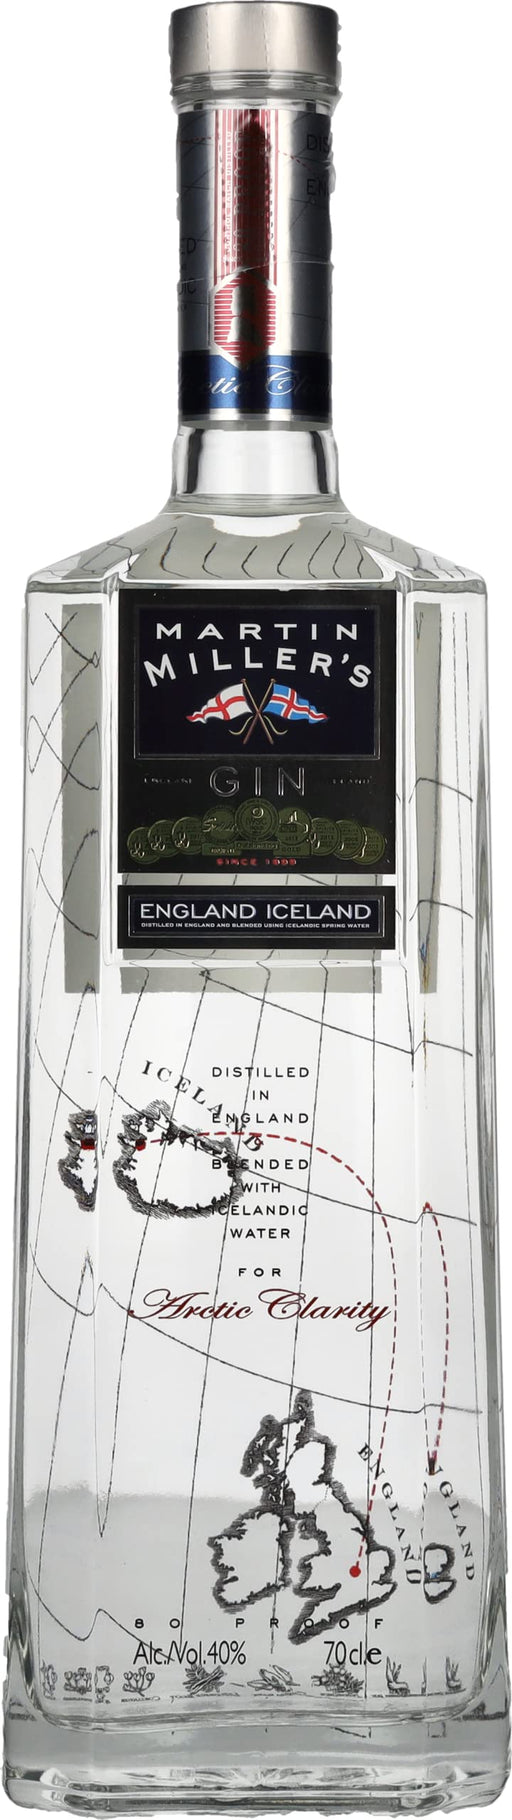 Millers Gin Reformed 40.0% 700Ml  Martin Miller's